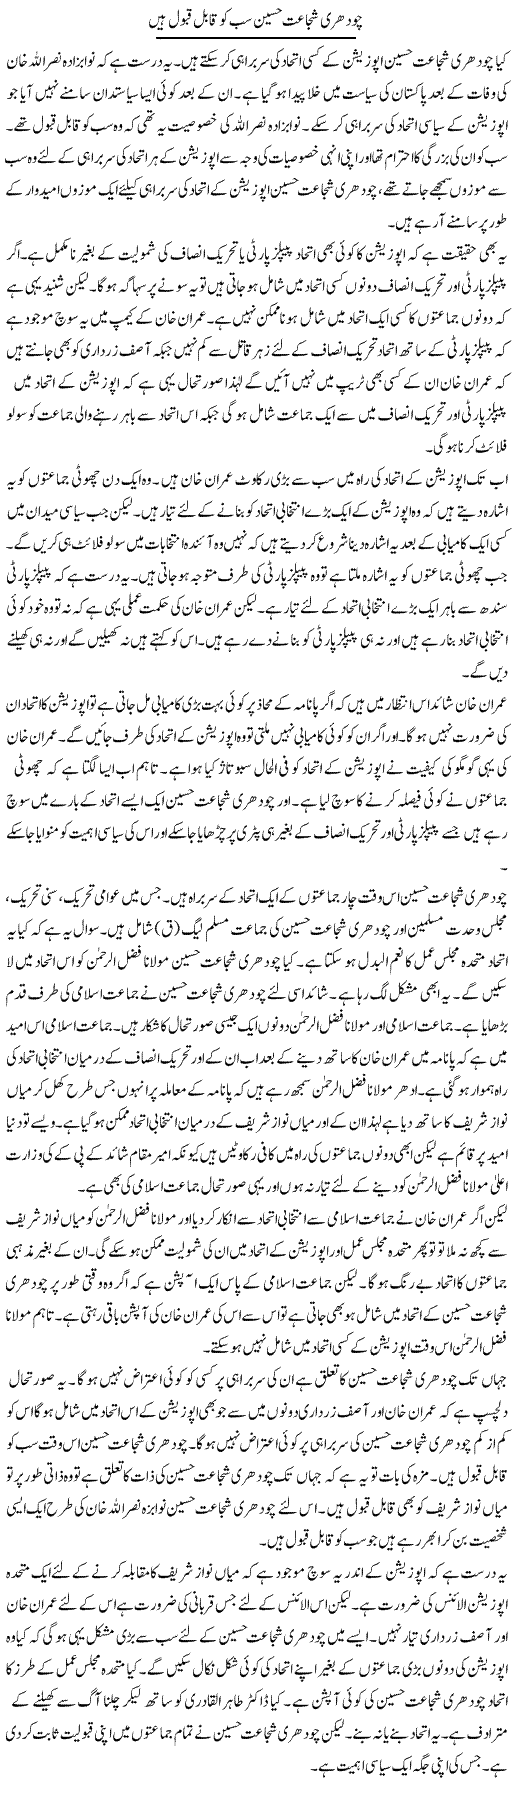 Chaudhry Shujaat Hussain Sab Ko Qabil Qubool Hain | Muzamal Suharwardy | Daily Urdu Columns